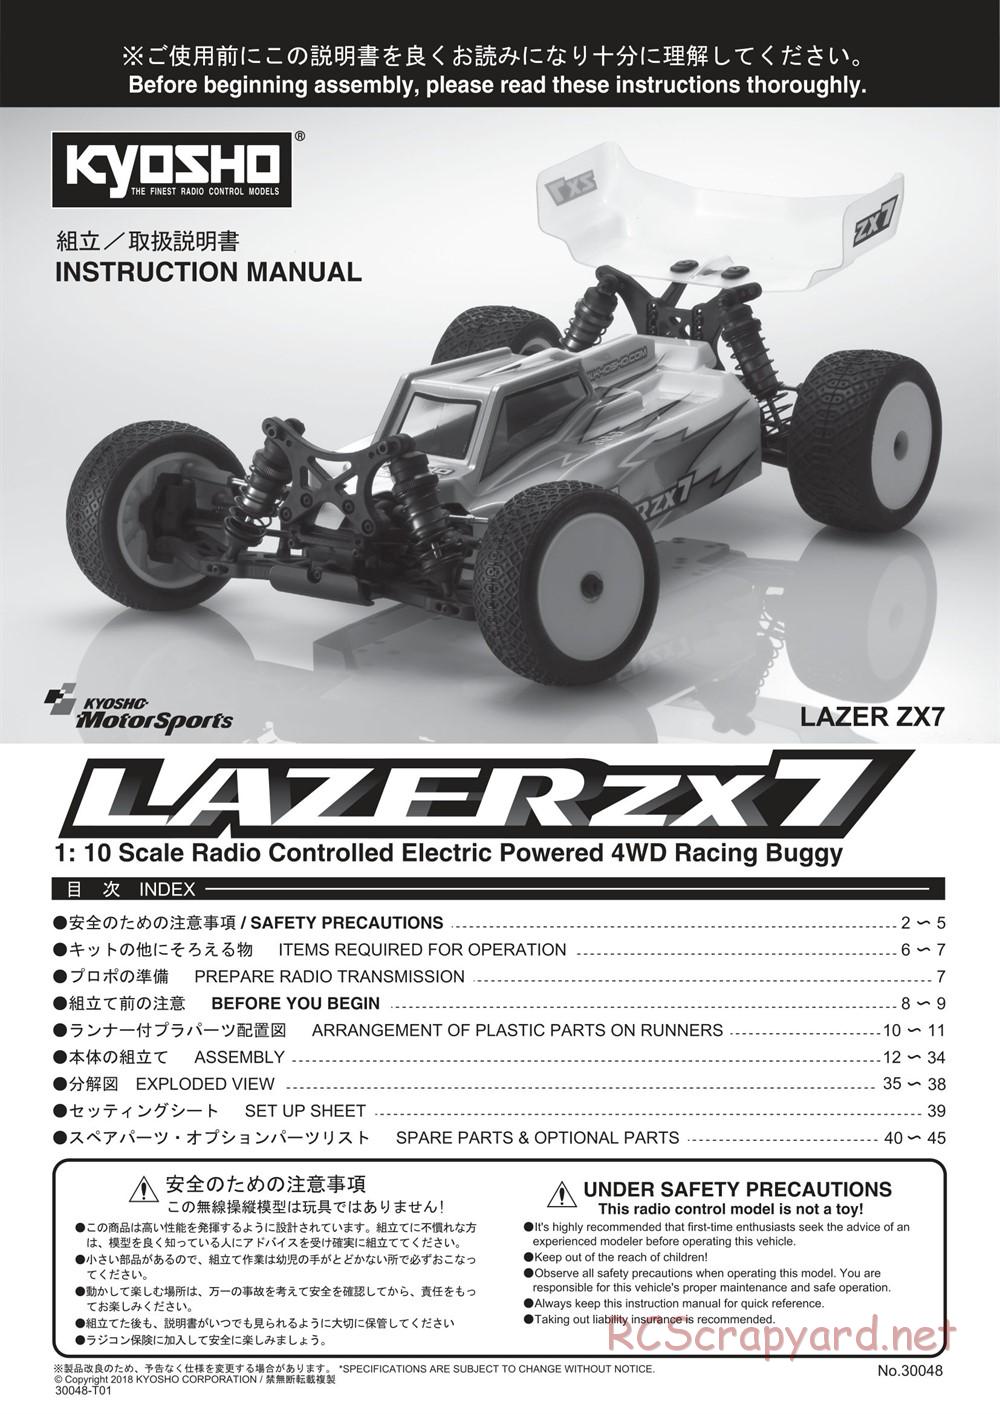 Kyosho - Lazer ZX7 - Manual - Page 1